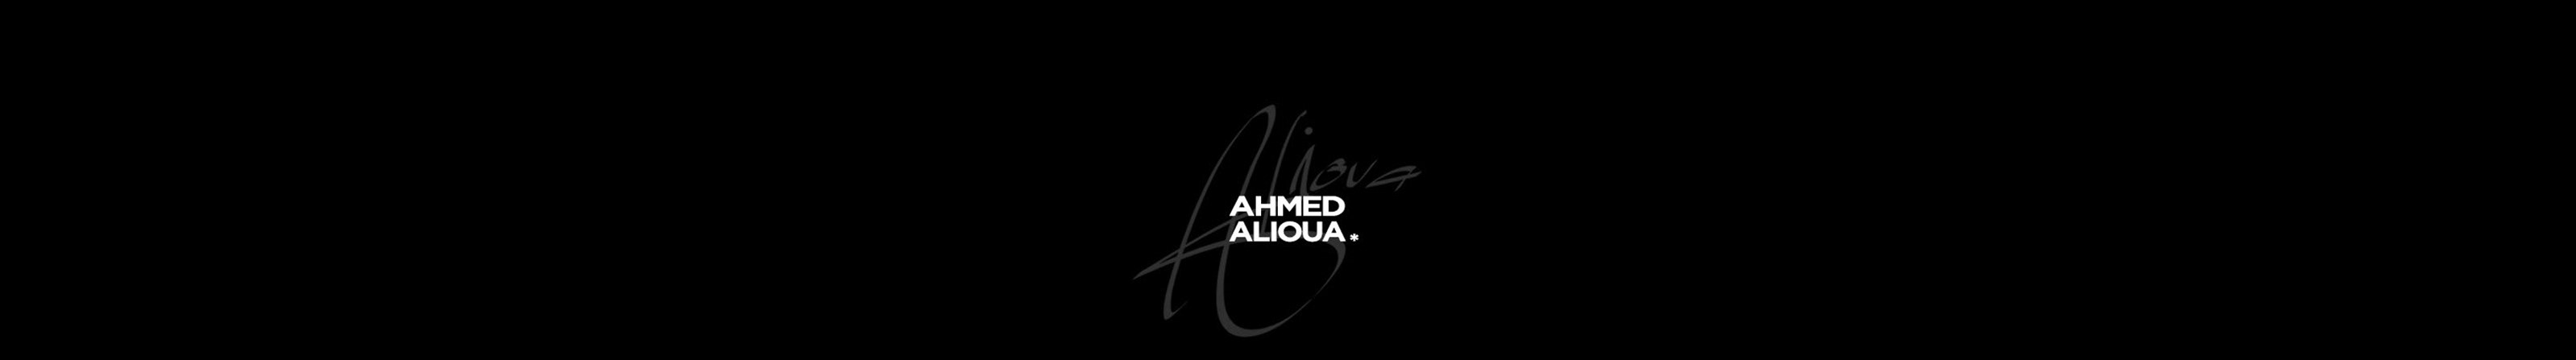 Ahmed Alioua's profile banner